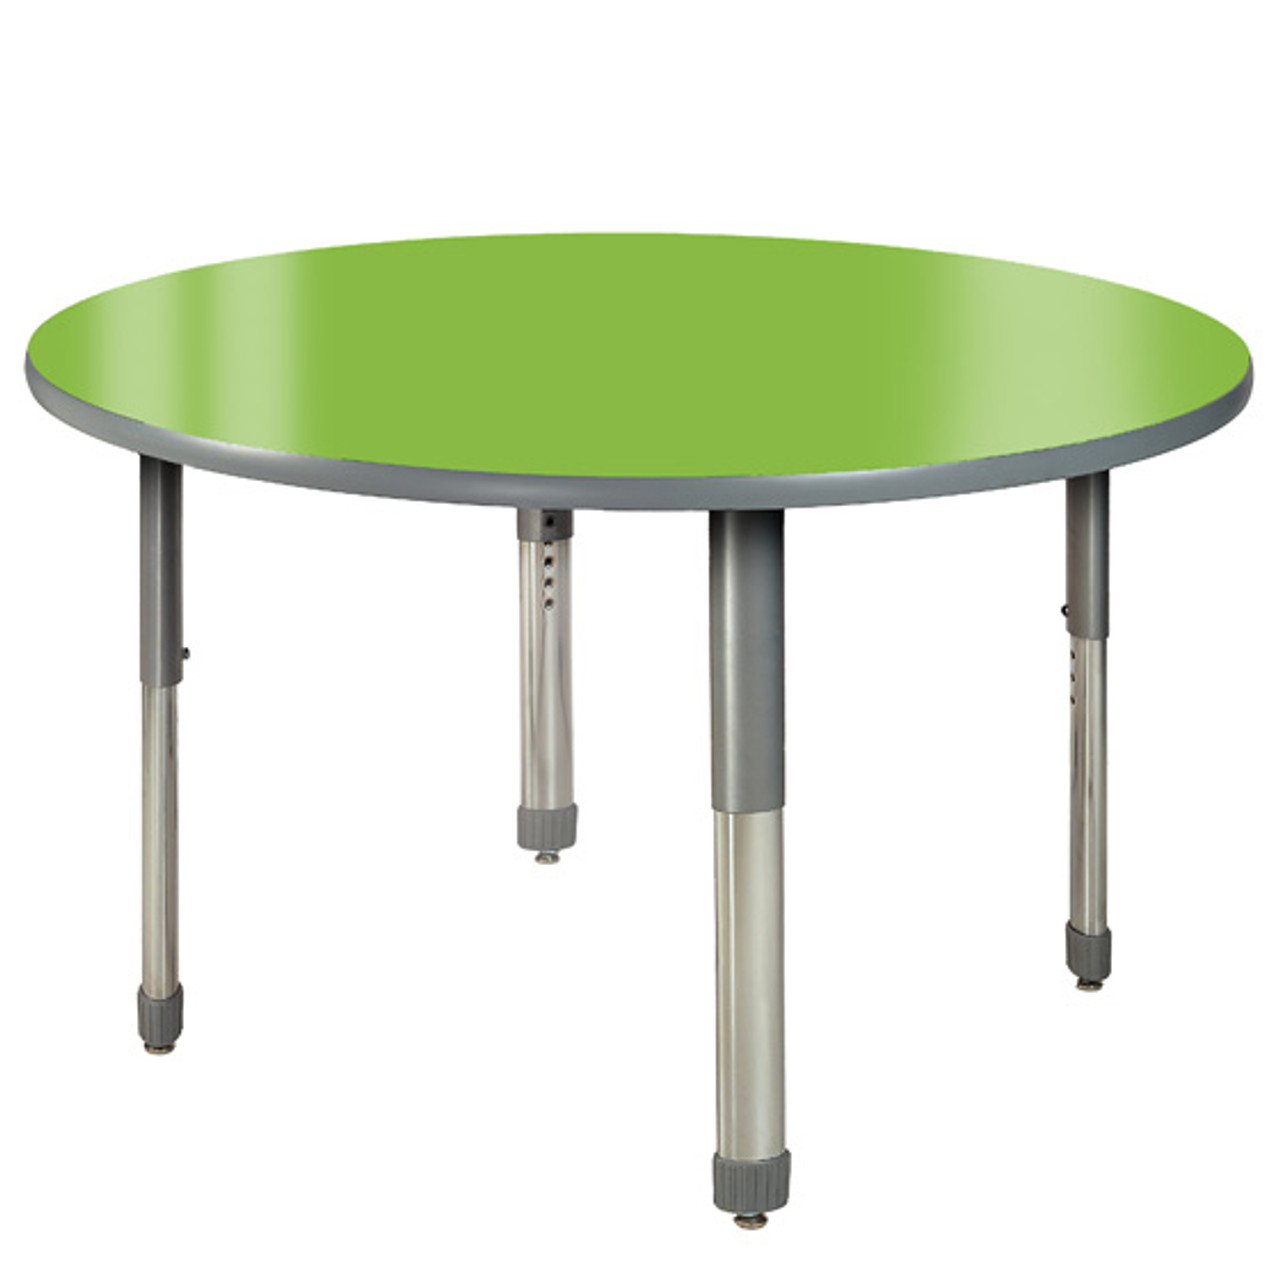 Table de réception ronde, table en polypro, table solide polypropyléne